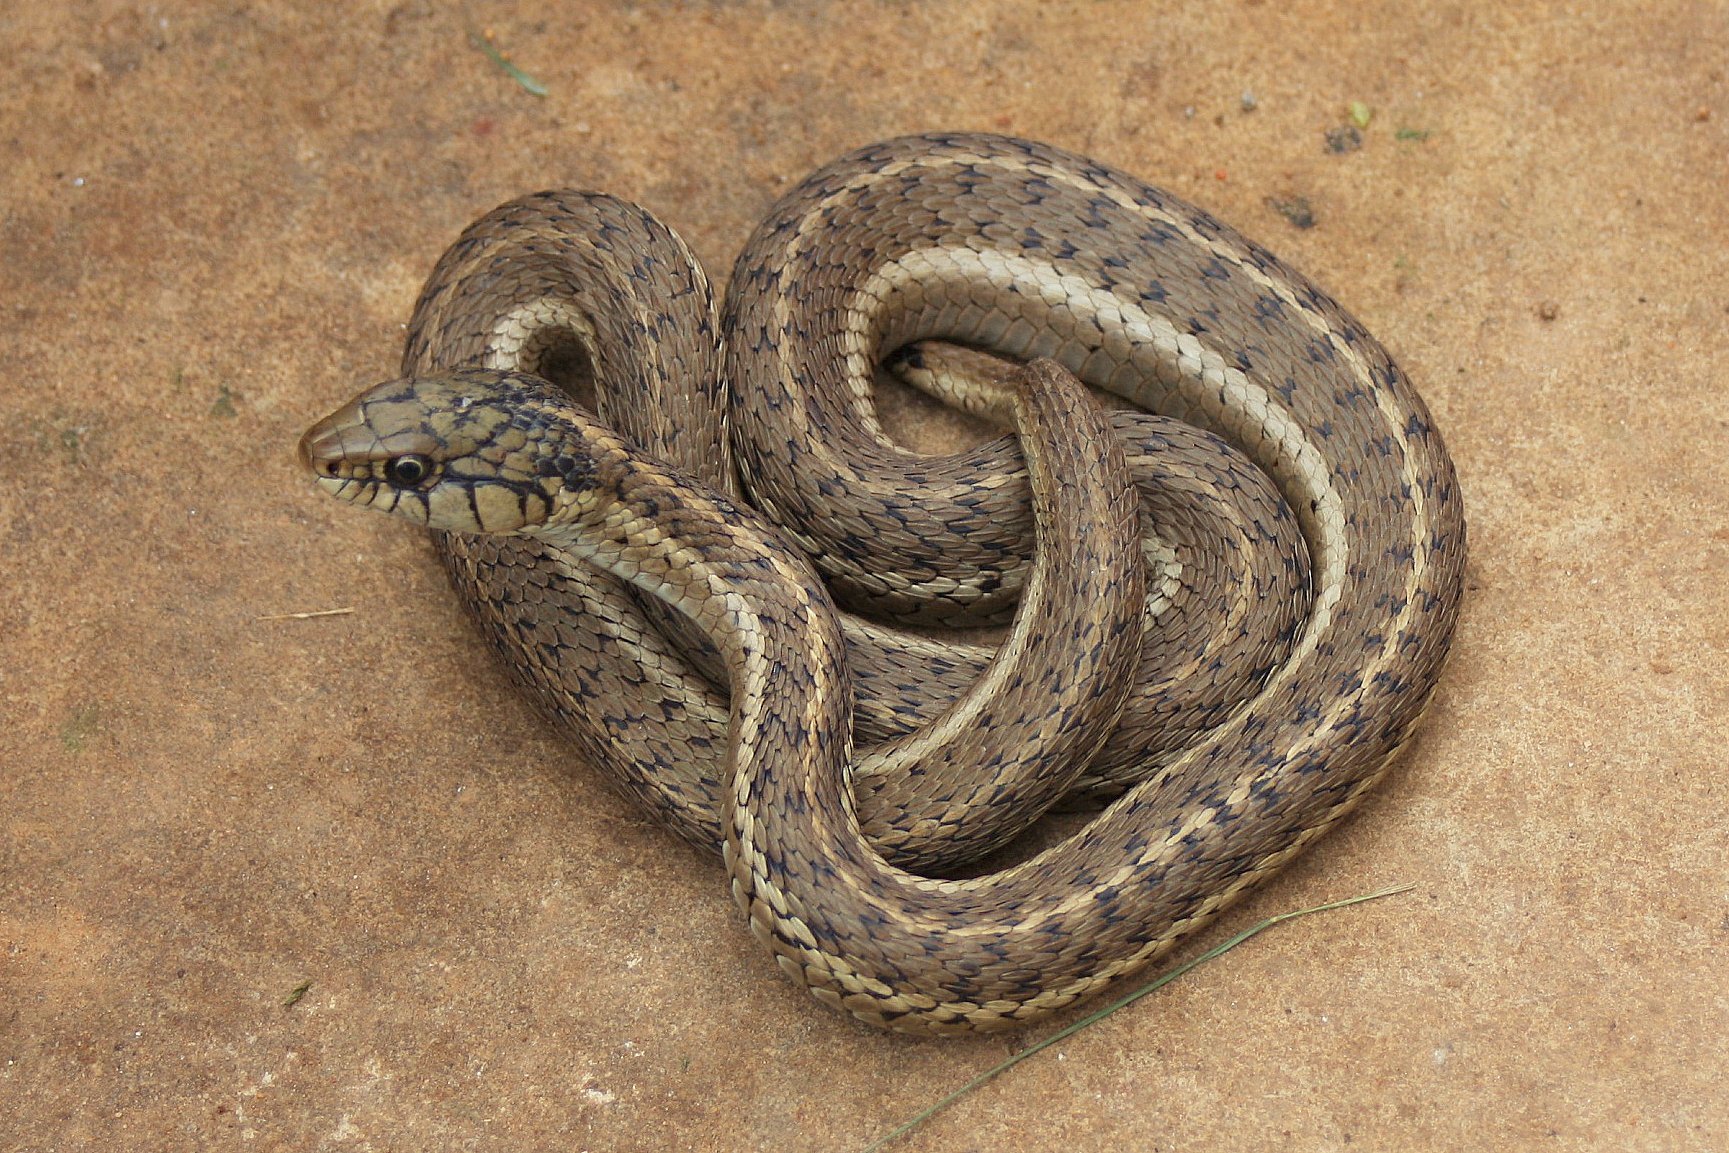 Western Terrestrial Garter Snake (Thamnophis elegans) · iNaturalist.org